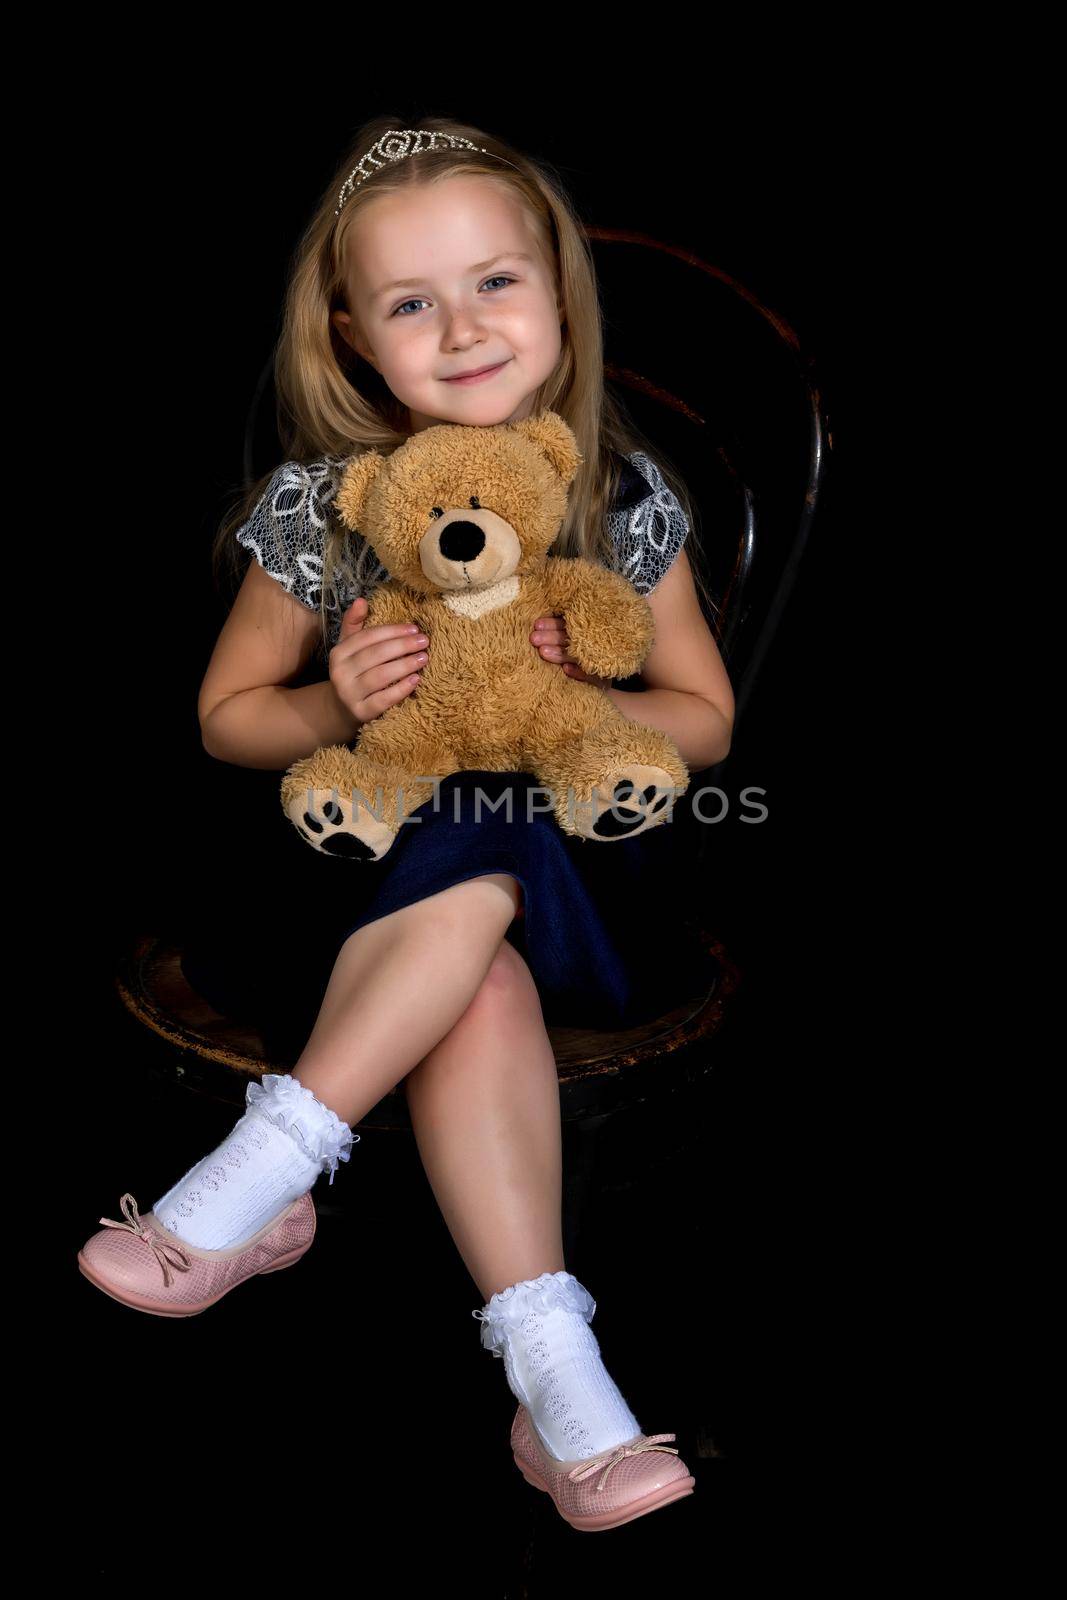 Little girl with a teddy bear on a black background. by kolesnikov_studio